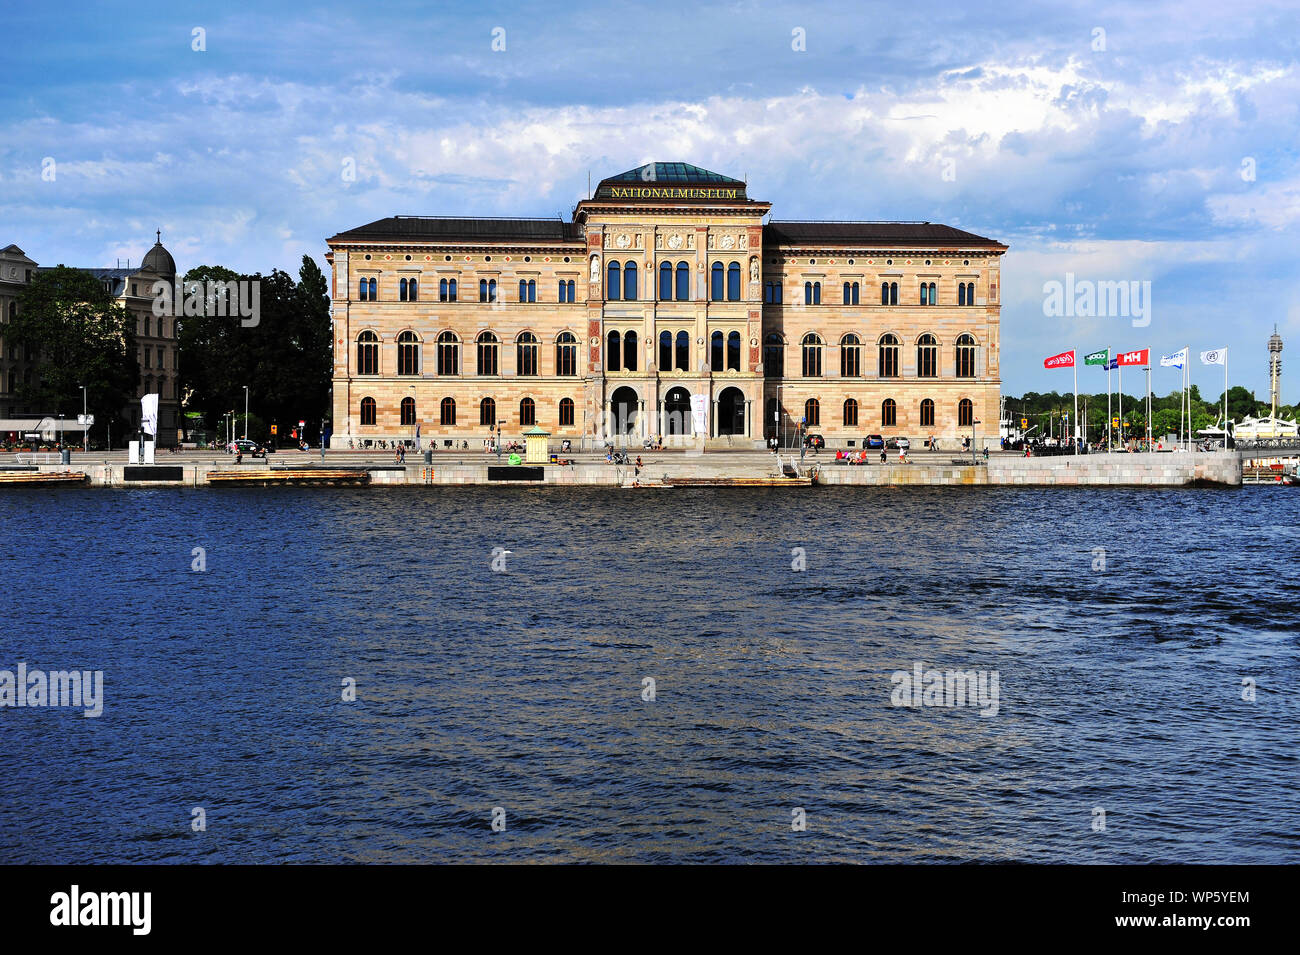 Stockholm, Schweden - 30. Juni 2019: Blick auf das Nationalmuseum in Stockholm am 30. Juni 2019. Stockfoto